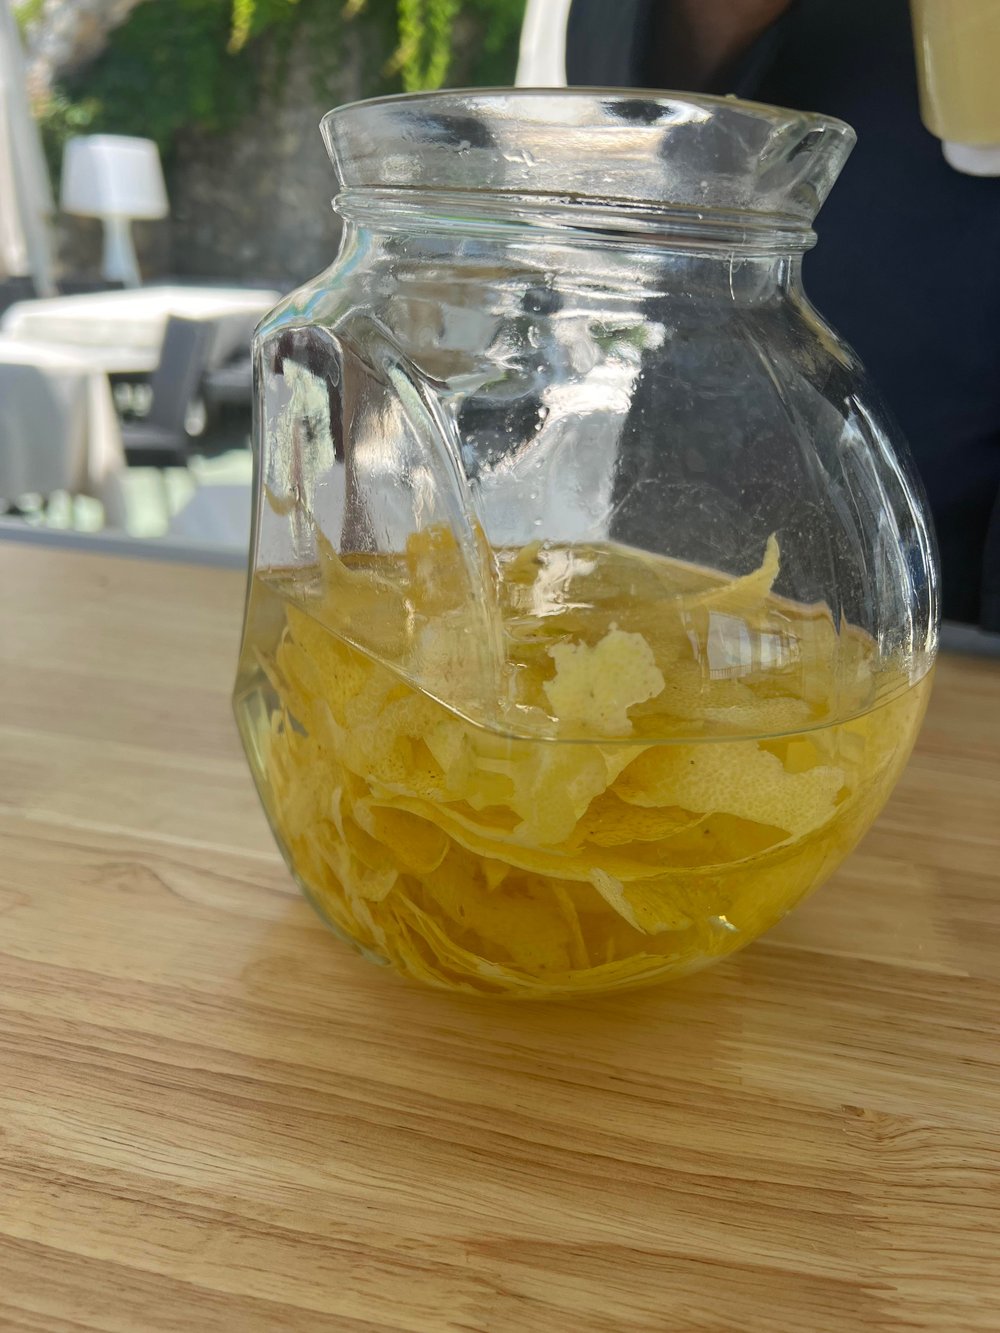 Combine the lemon peels and 1 litre of alcohol